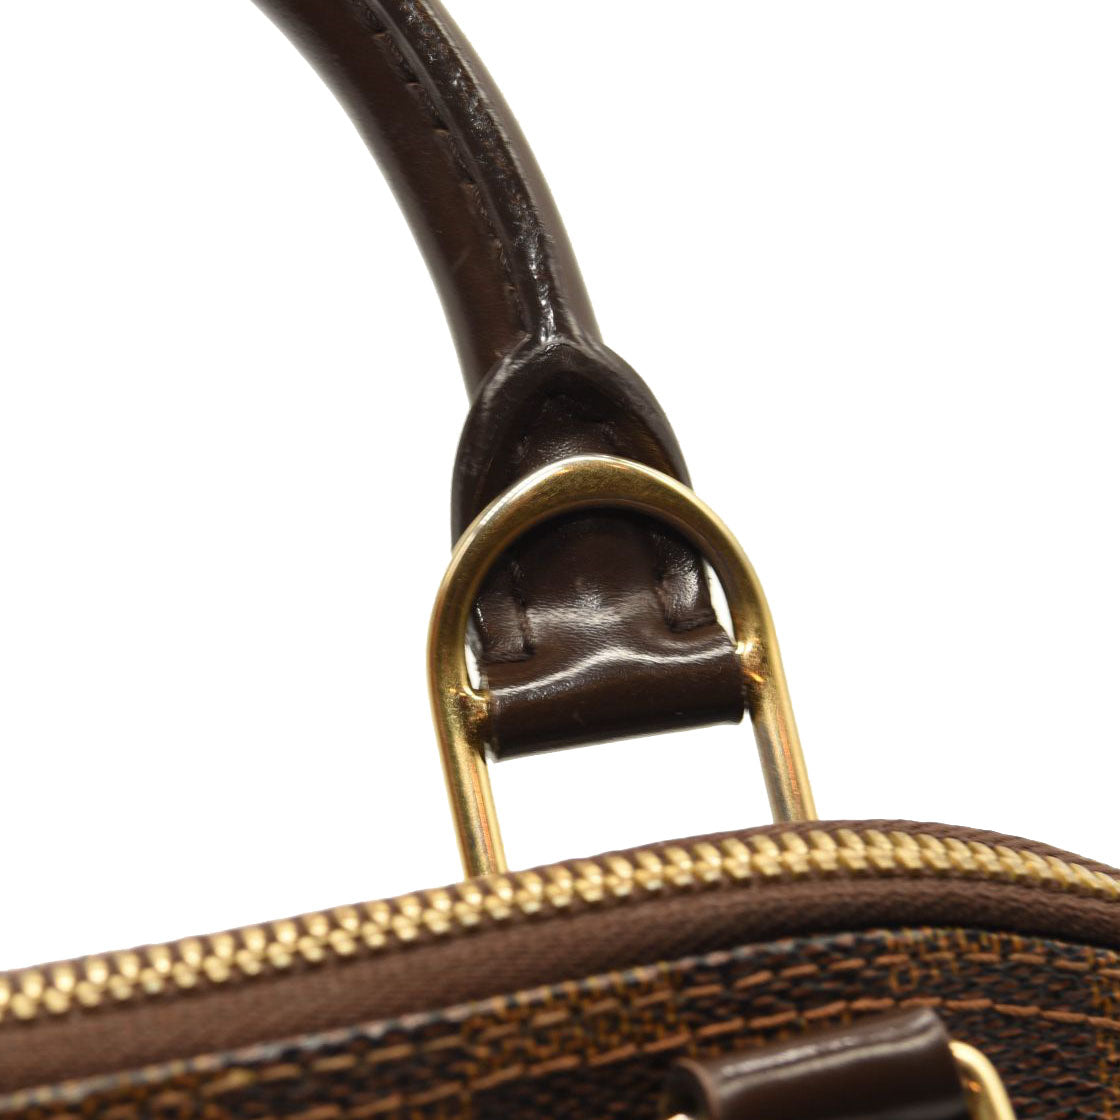 Louis Vuitton Damier Ebene Alma BB Handbag Satchel 